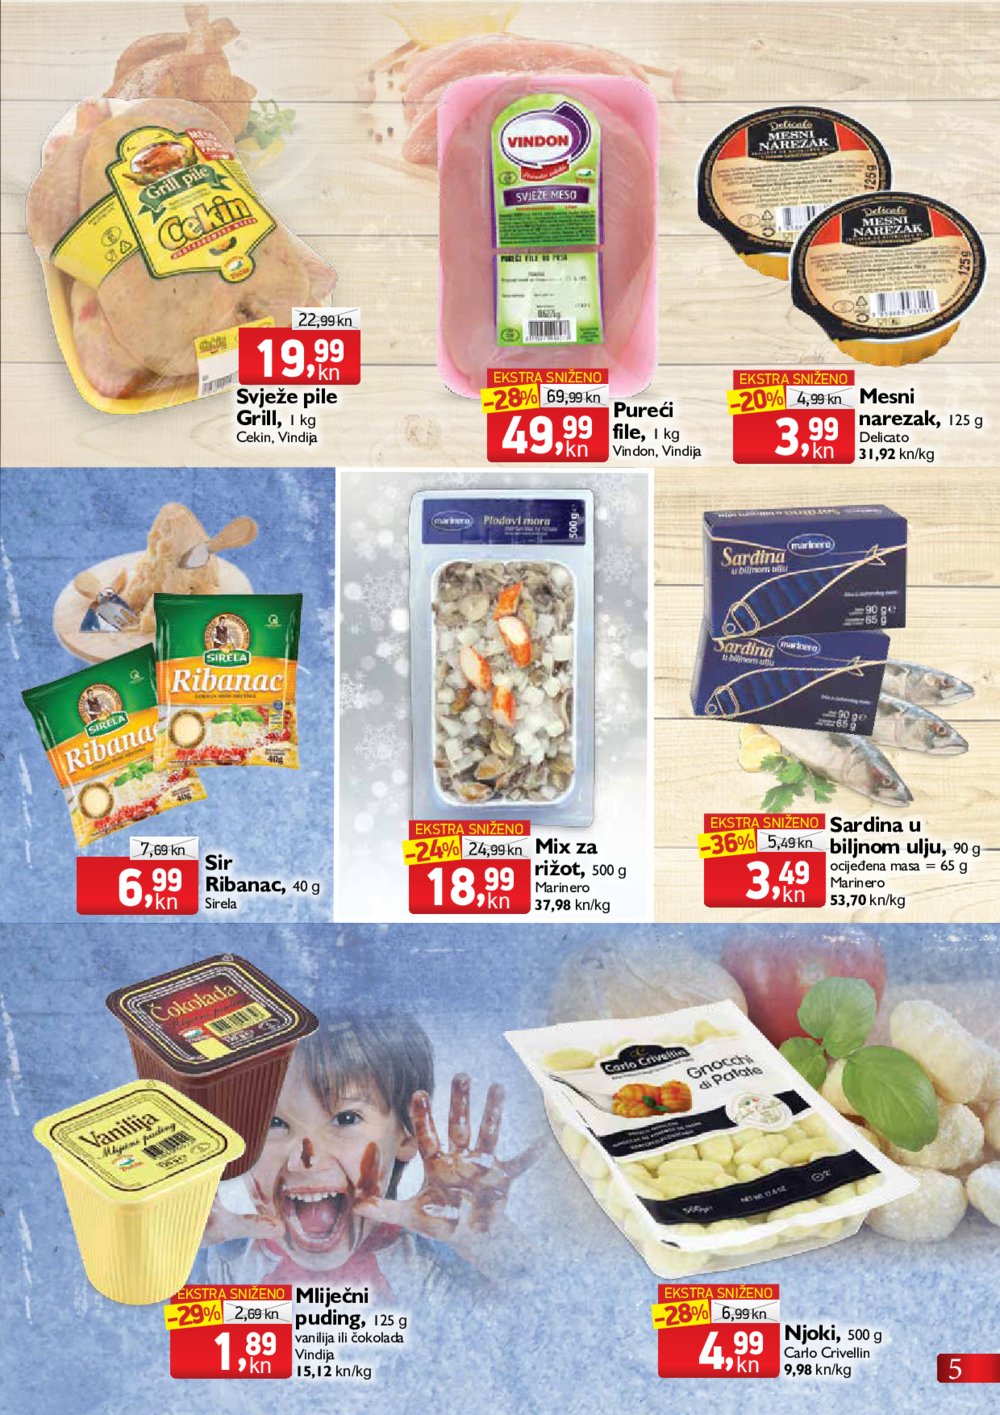 Tommy katalog Hipermarket i maximarket super ponuda do 18.01.2017.